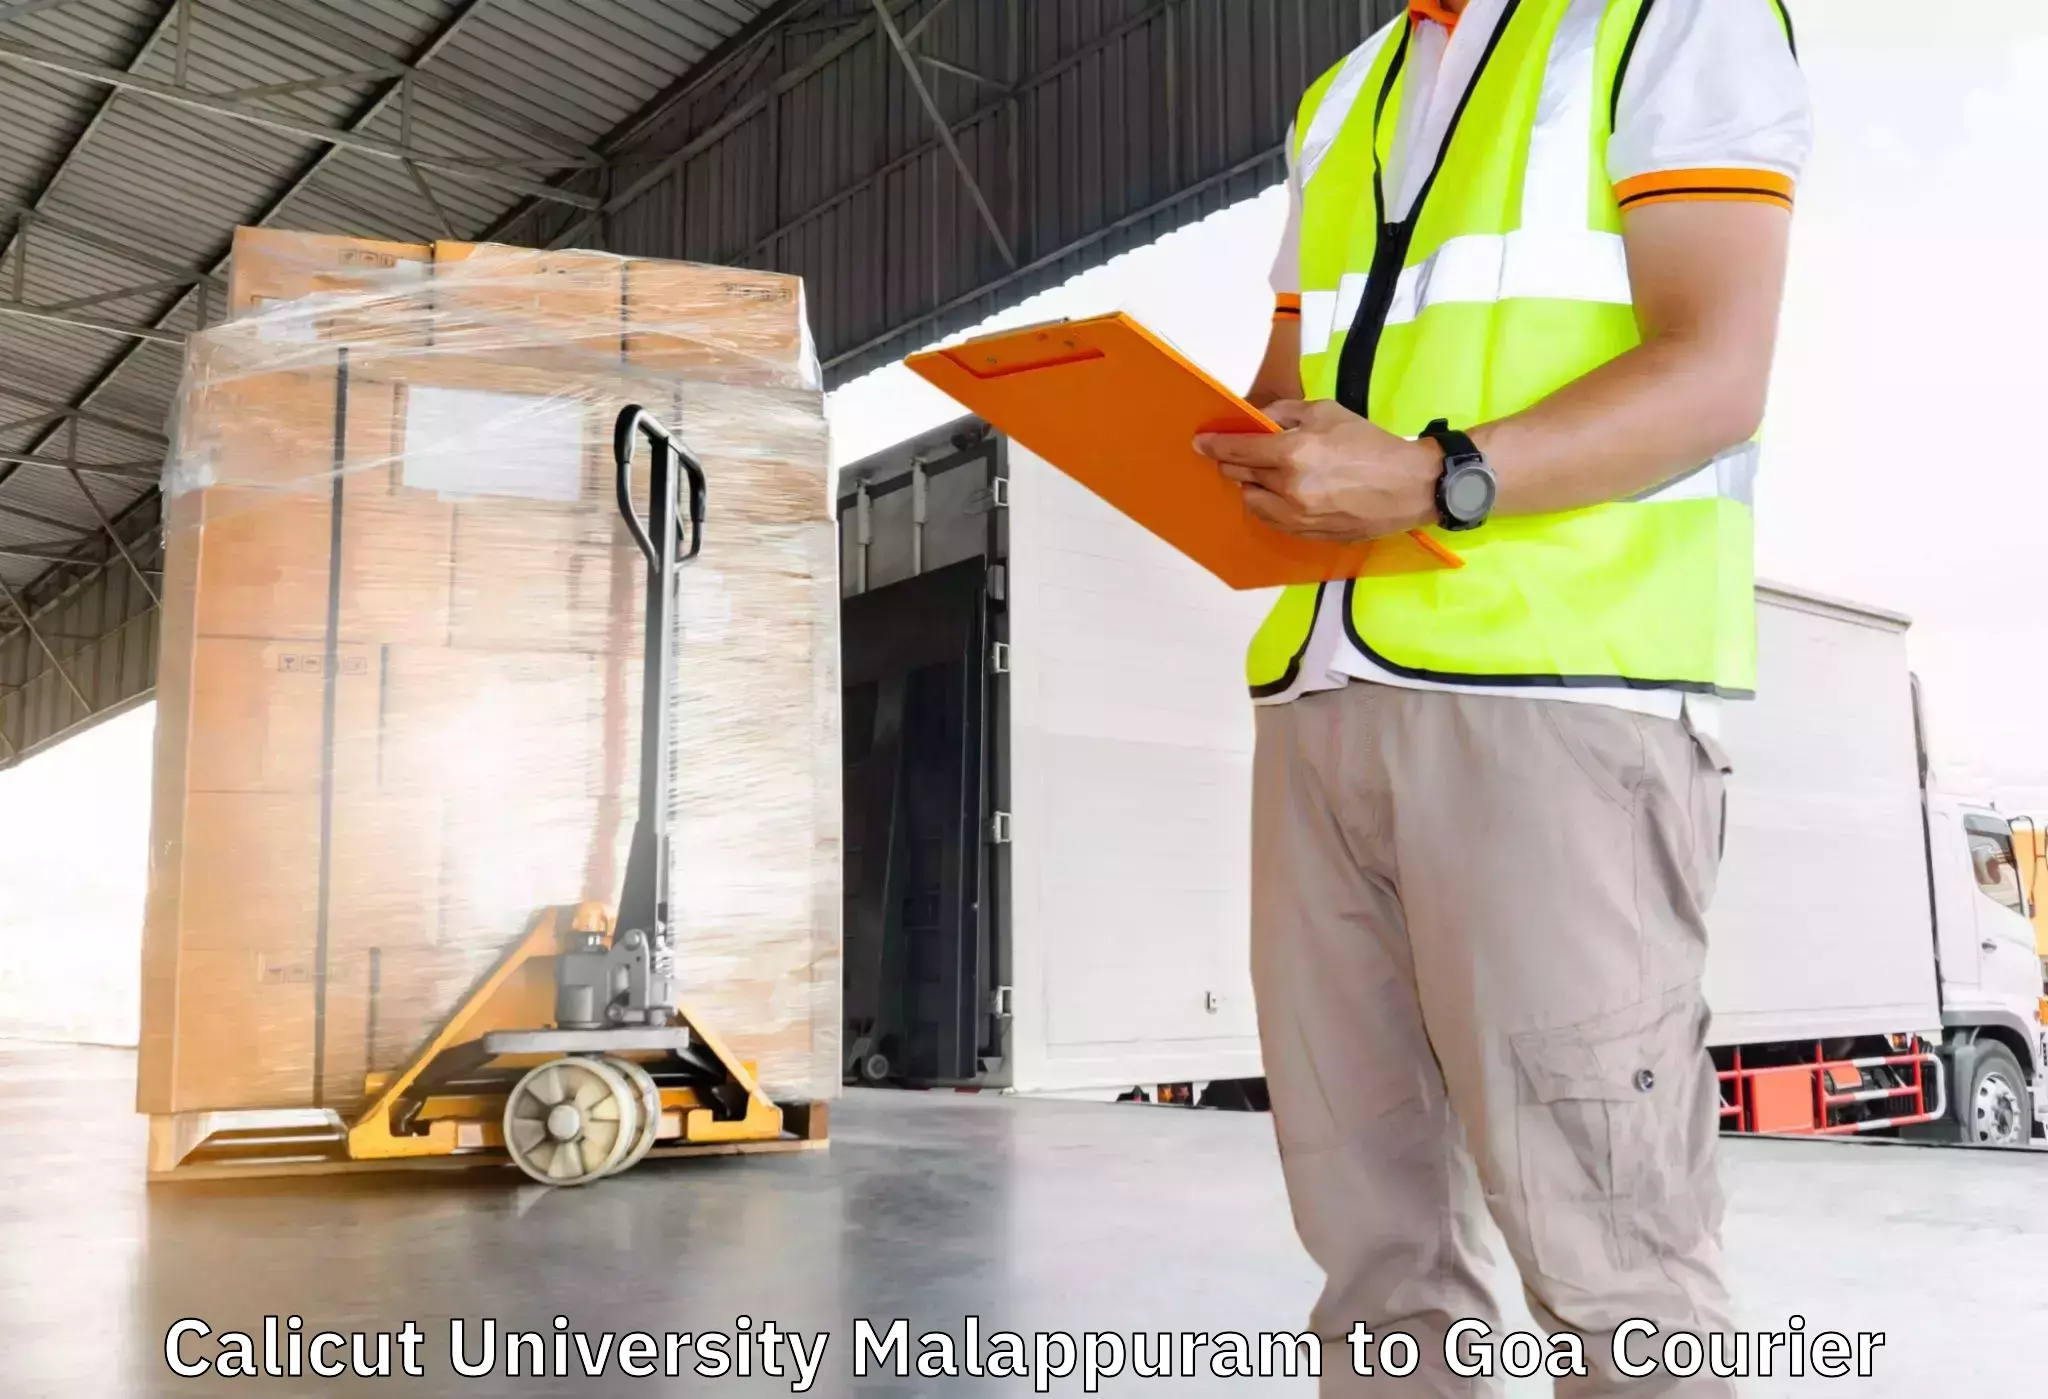 Furniture moving assistance Calicut University Malappuram to IIT Goa